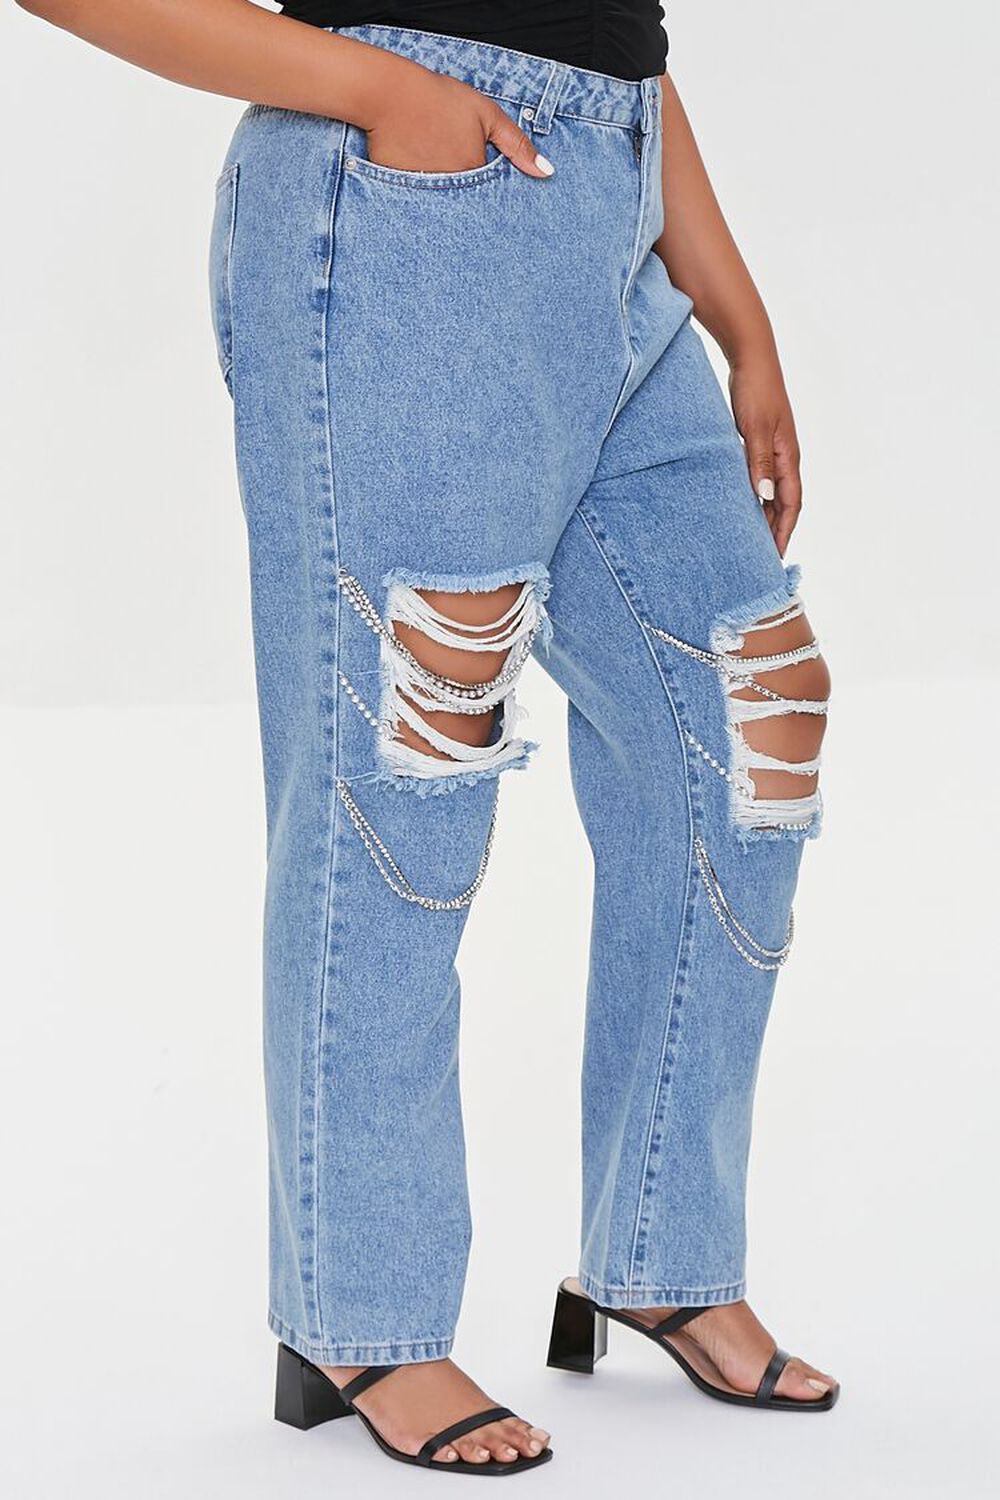 MEDIUM DENIM Plus Size Distressed Chain Jeans, image 3